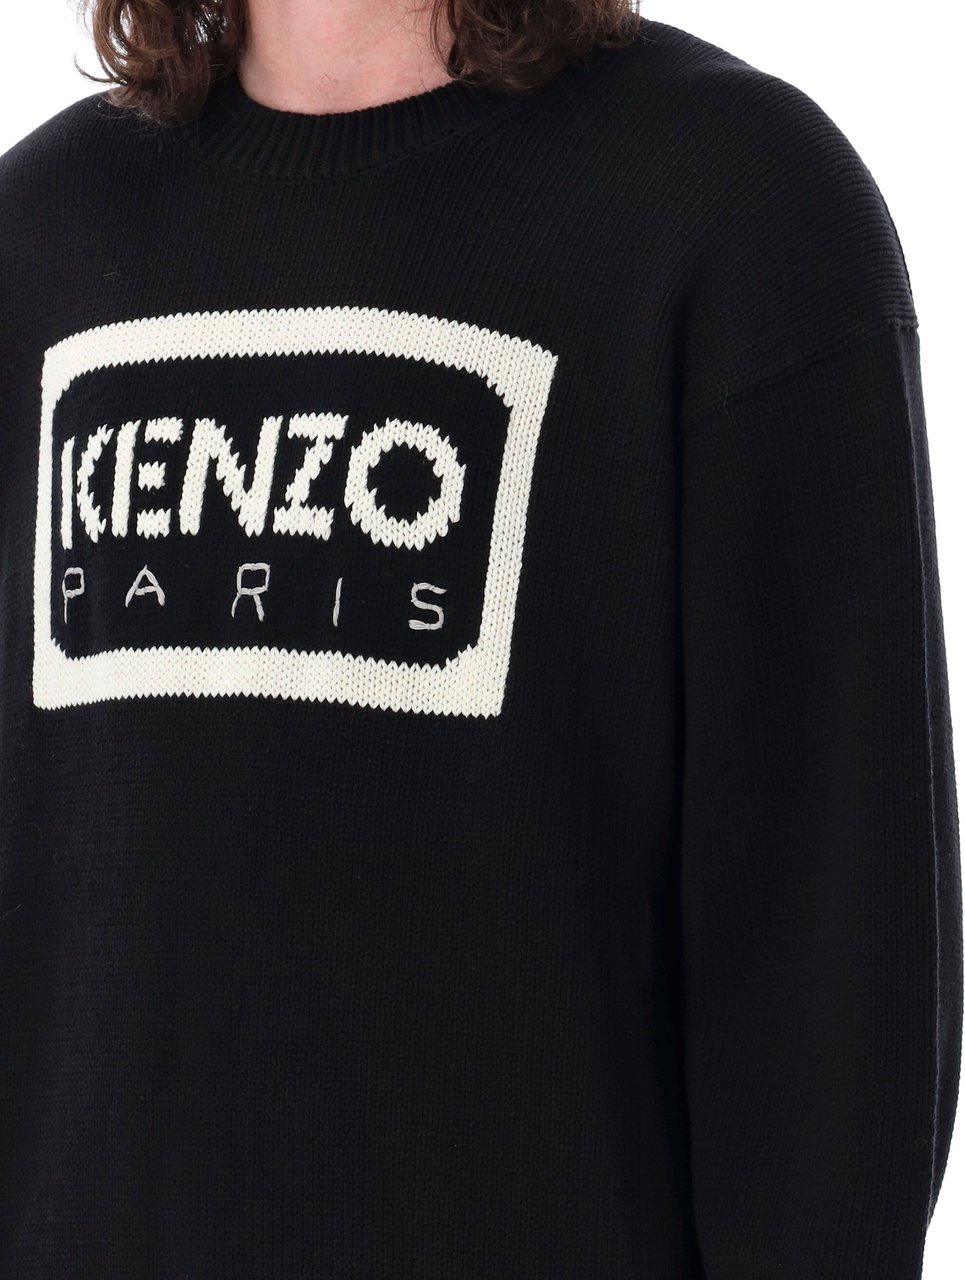 Kenzo KENZO PARIS SWEATER Zwart